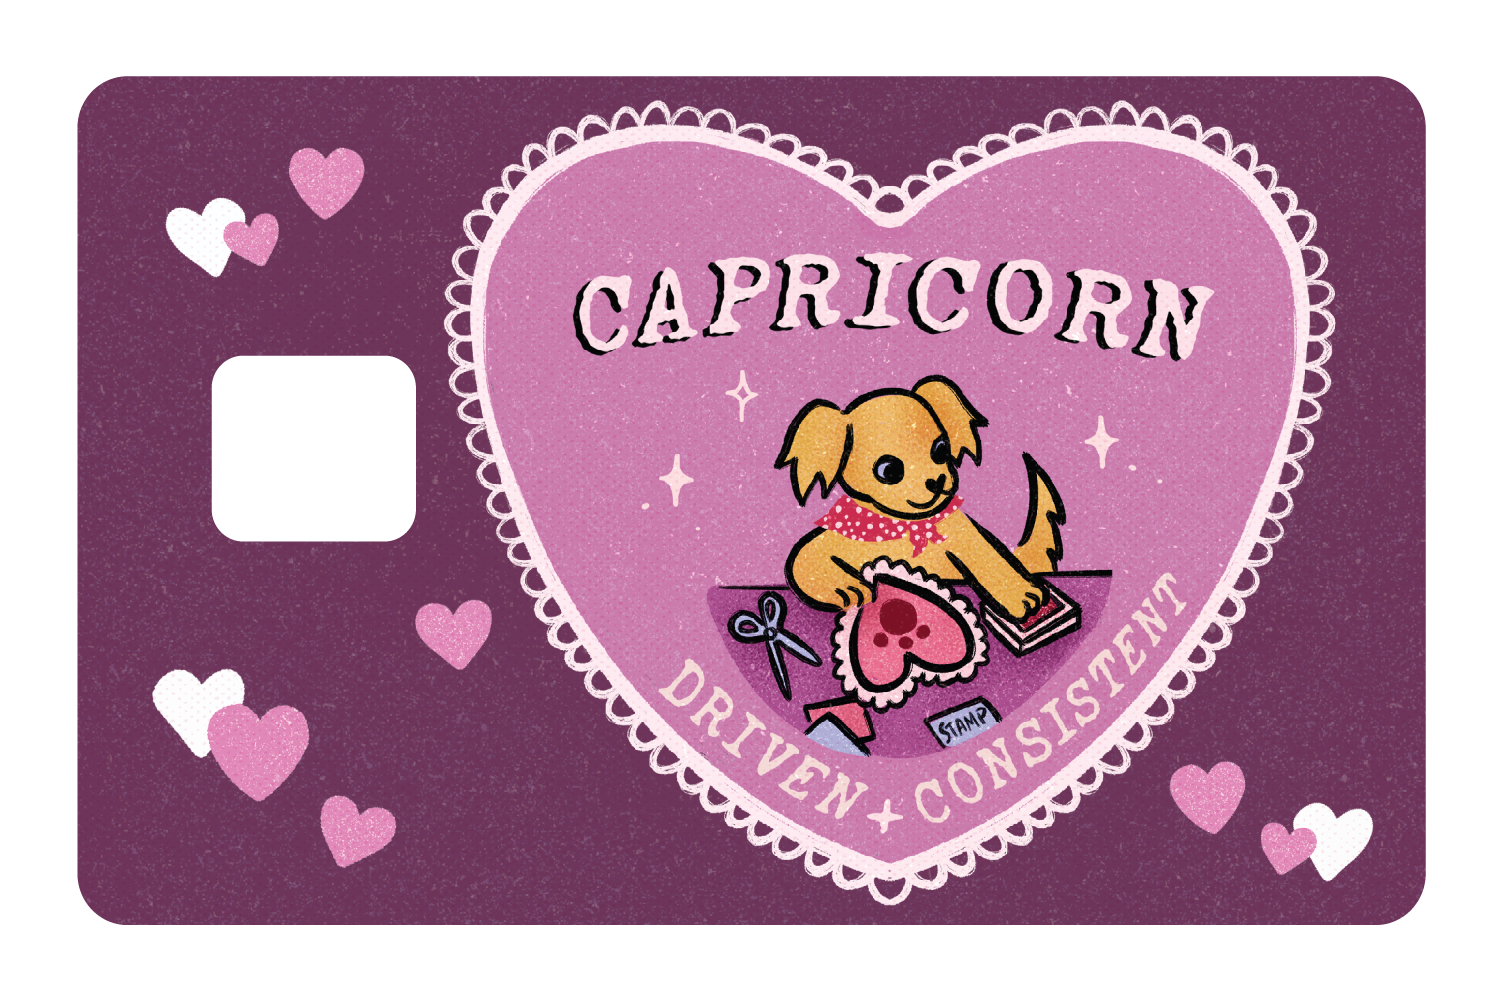 Capricorn puppy love